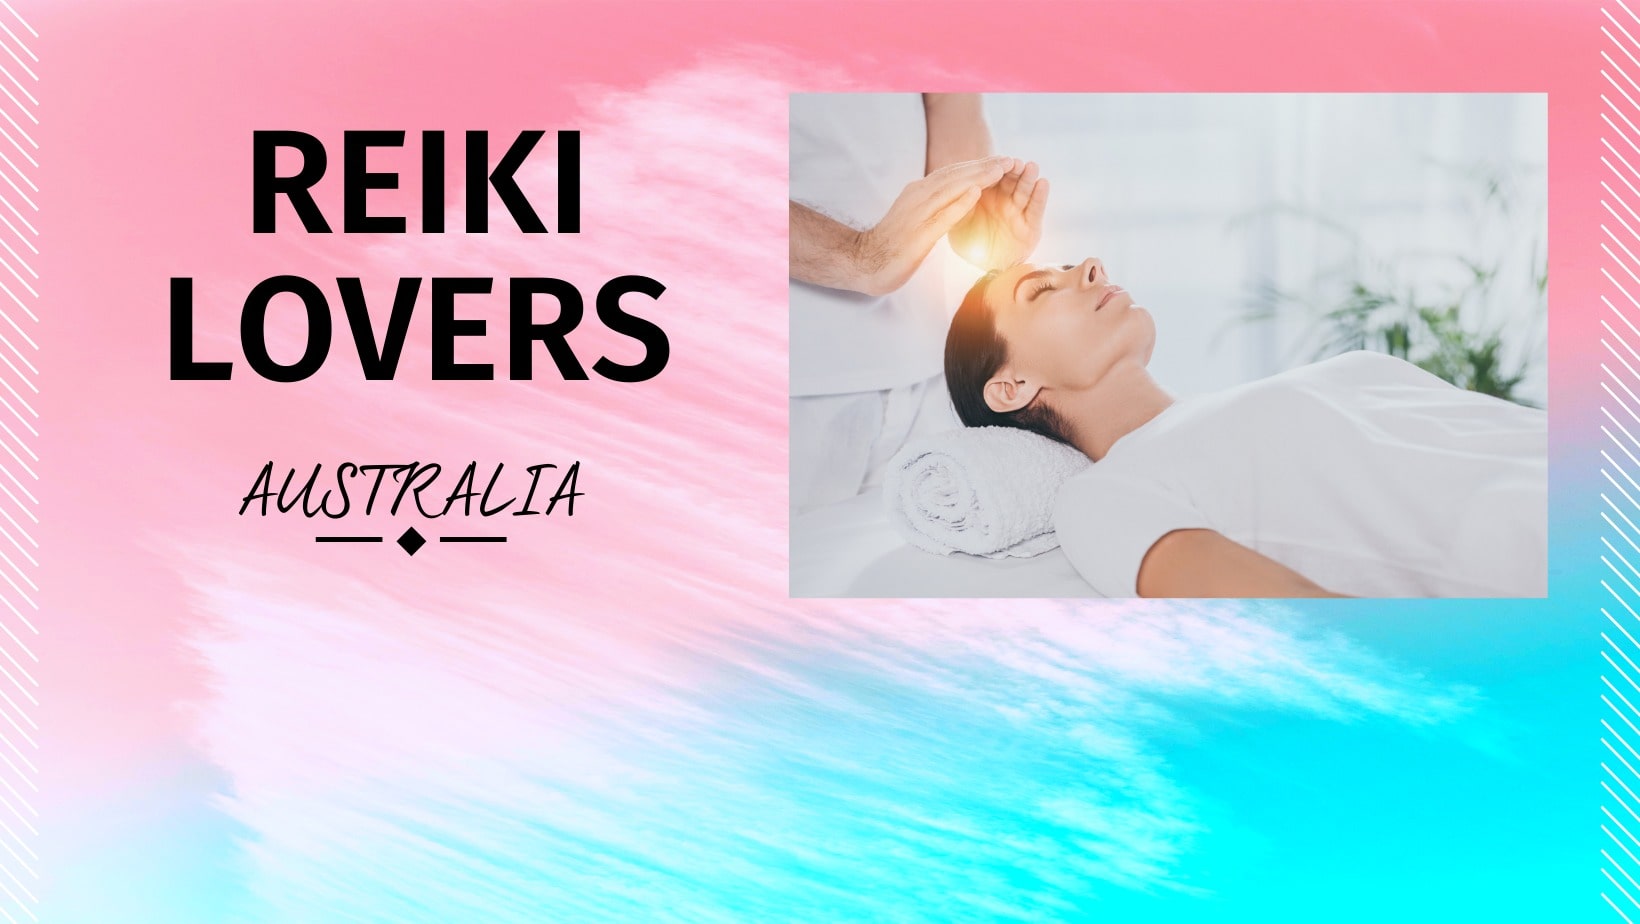 Reiki Lovers Australia - join us and share your love of Reiki